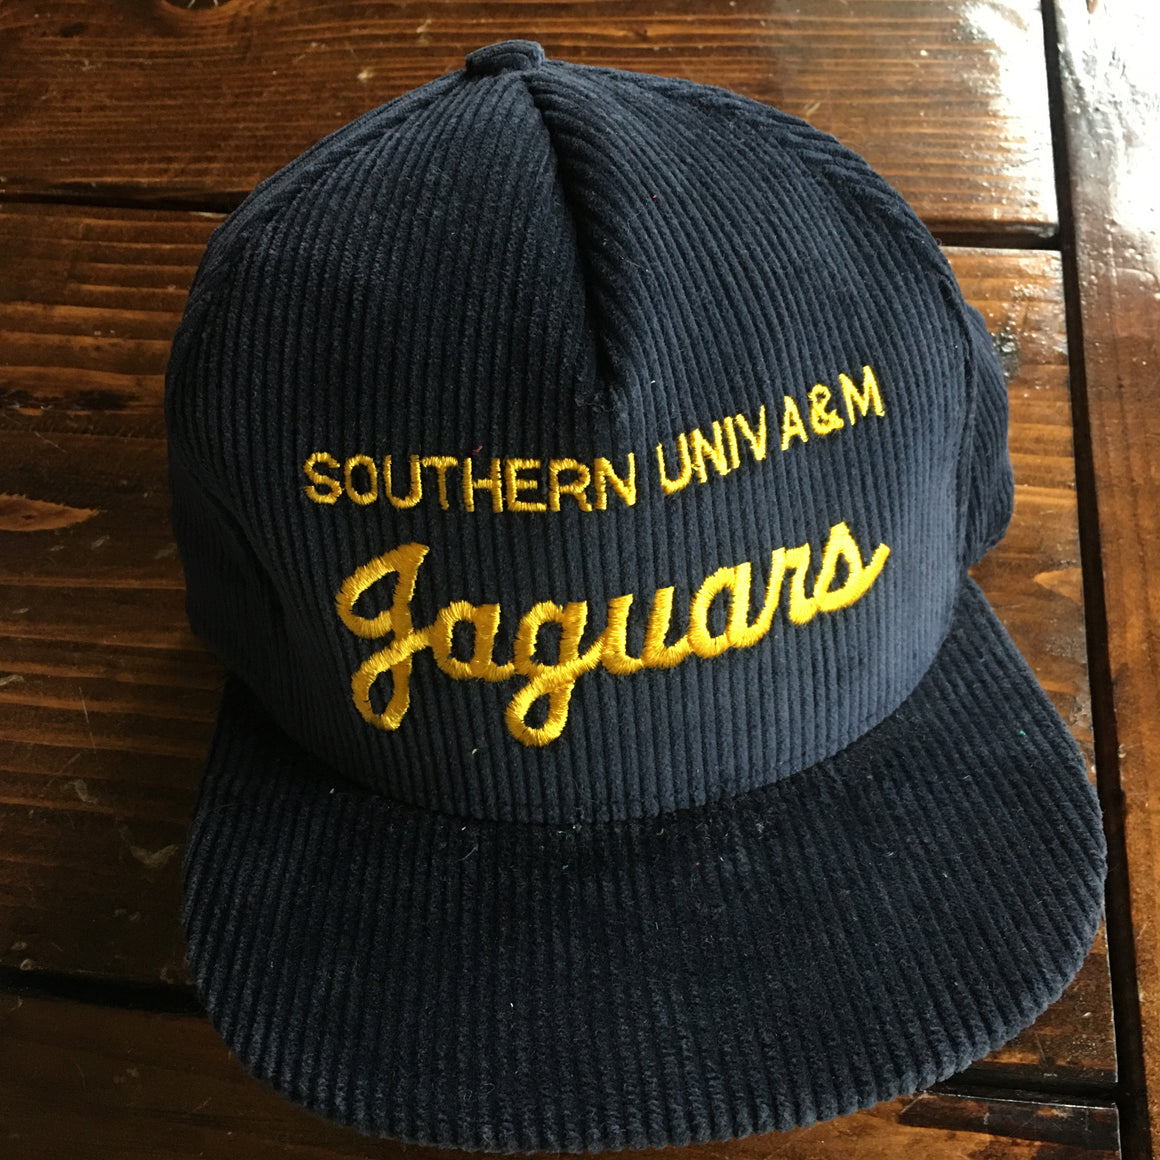 Southern Jaguars corduroy hat